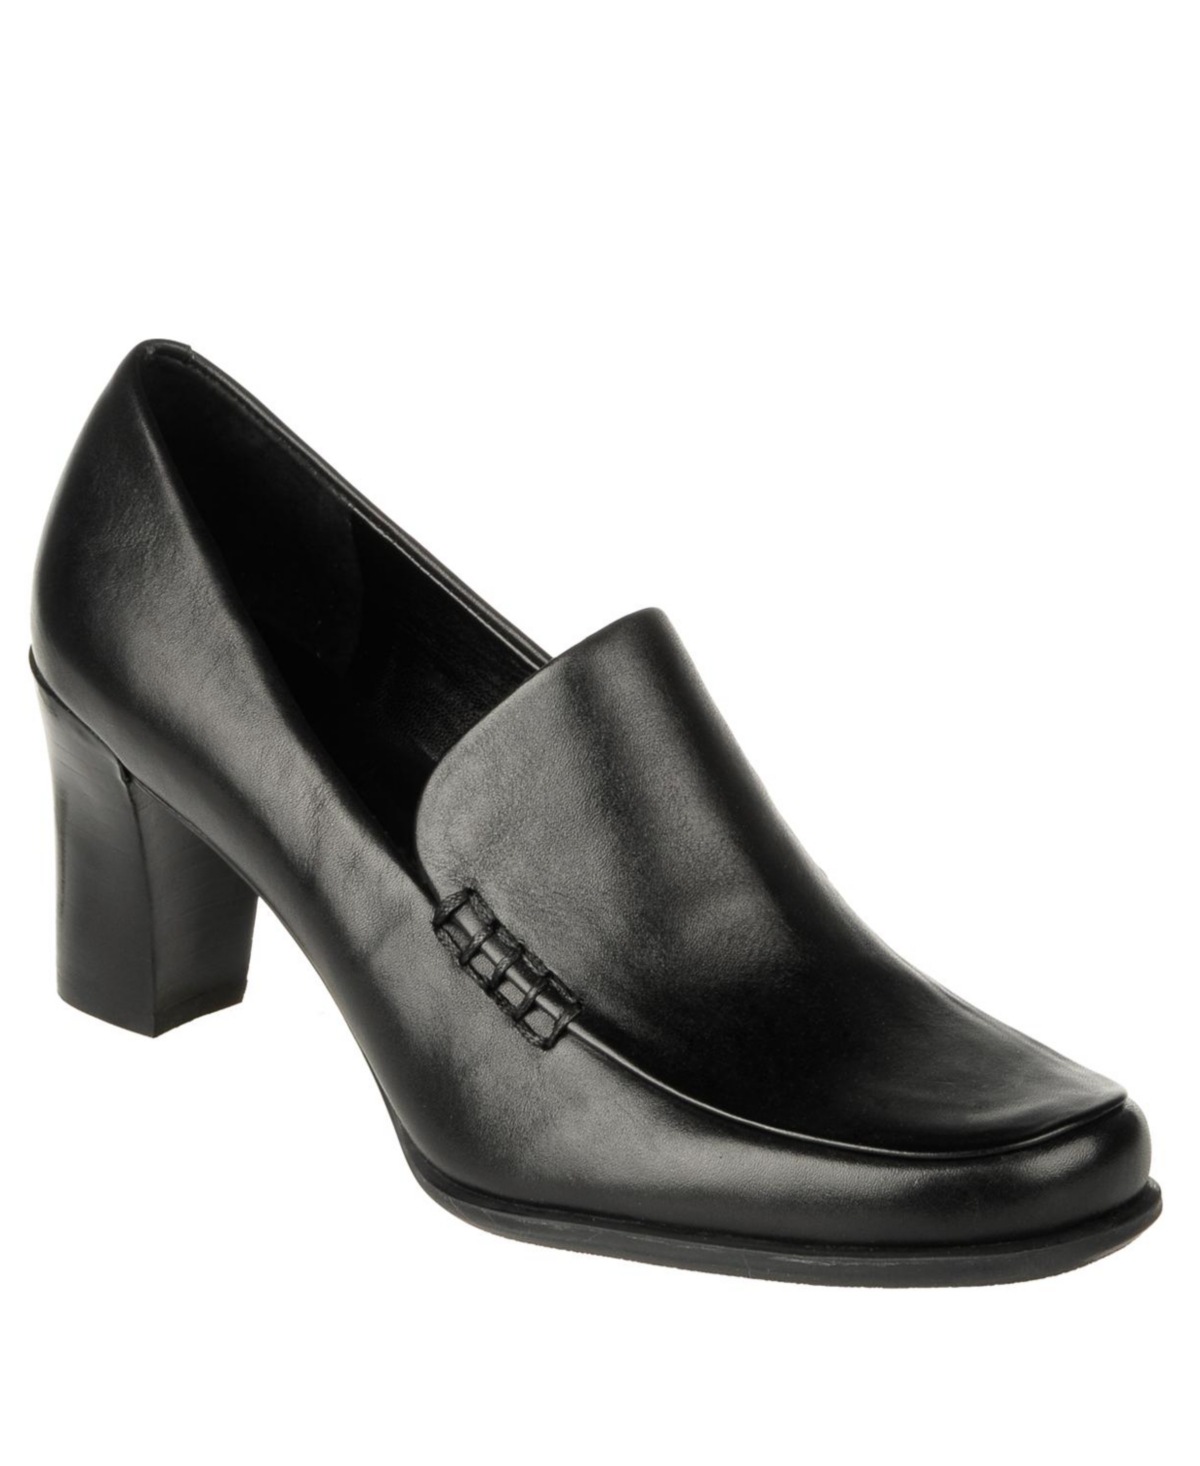 Women's Nolan Pump Loafers - Black Leather